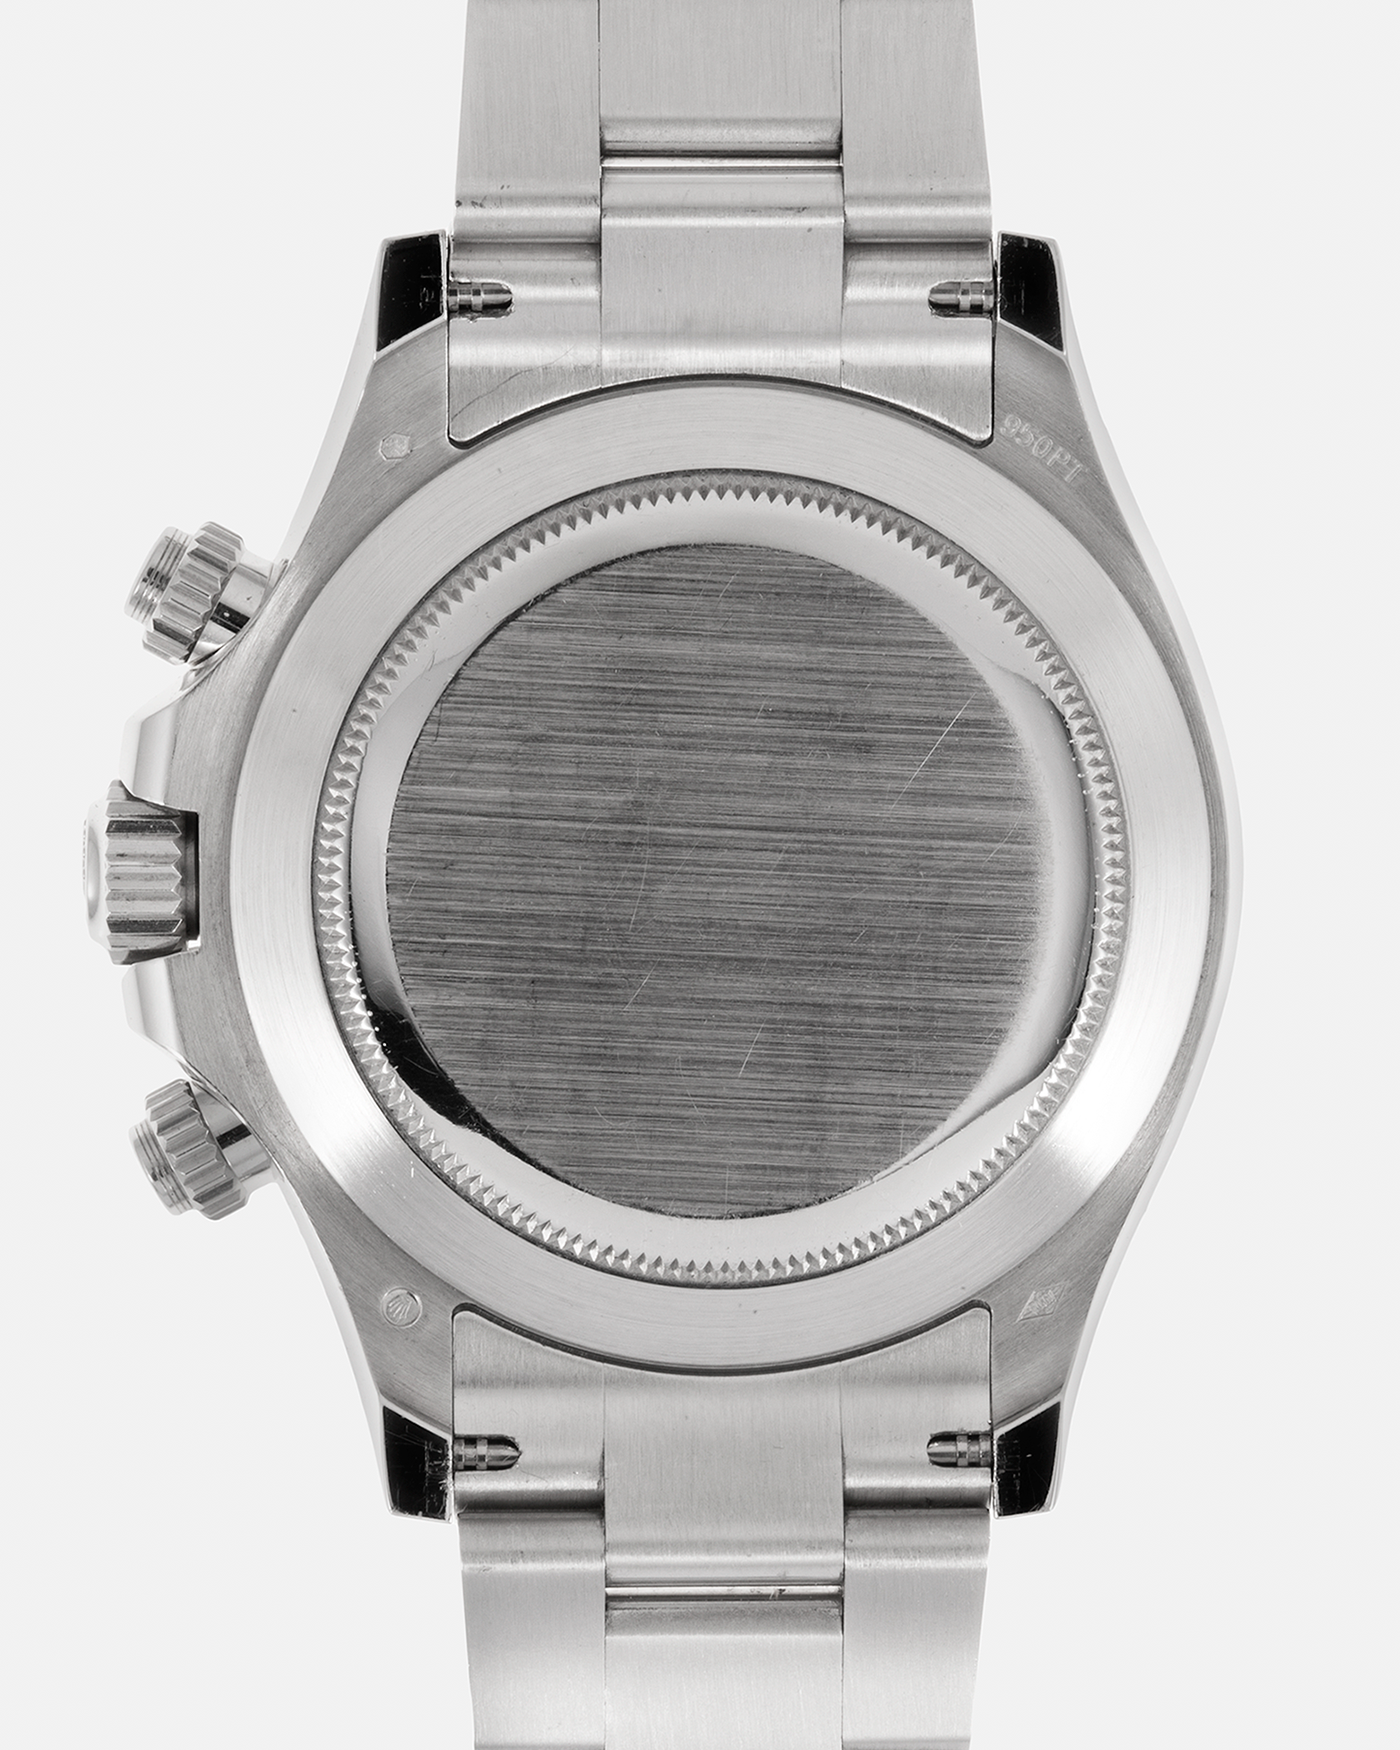 Brand: Rolex Year: 2020 Model: Cosmograph Daytona Reference: 116506 Material: Platinum 950 Movement: Rolex Cal. 4130, Self-Winding Case Diameter: 40mm Lug Width: 20mm Strap: Rolex Platinum Oyster Bracelet